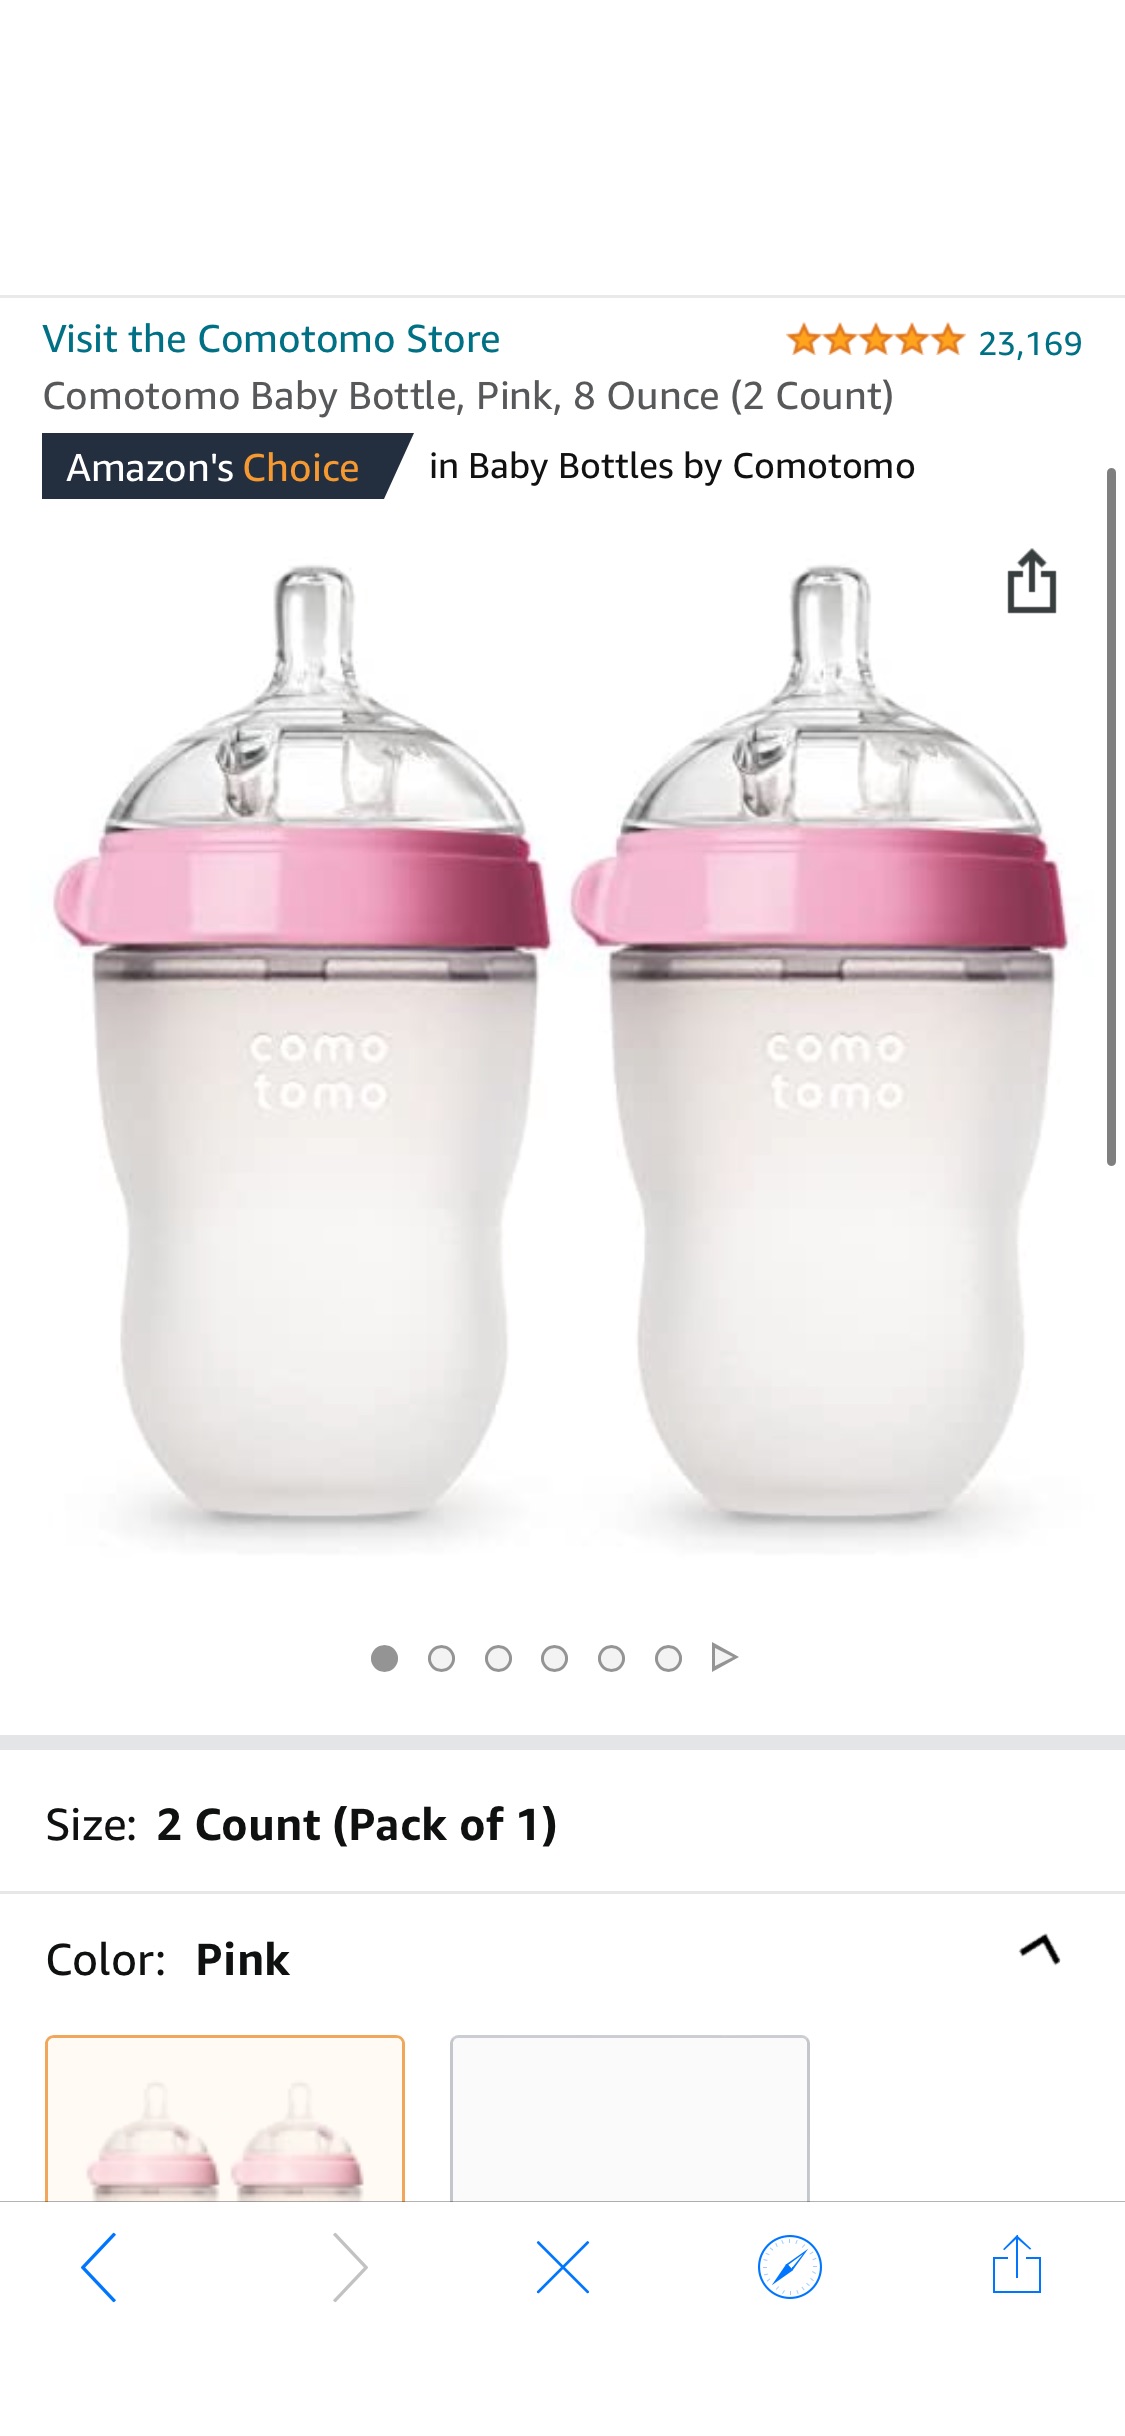 Amazon.com : Comotomo Baby Bottle, Pink, 8 Ounce (2 Count) : Baby奶瓶